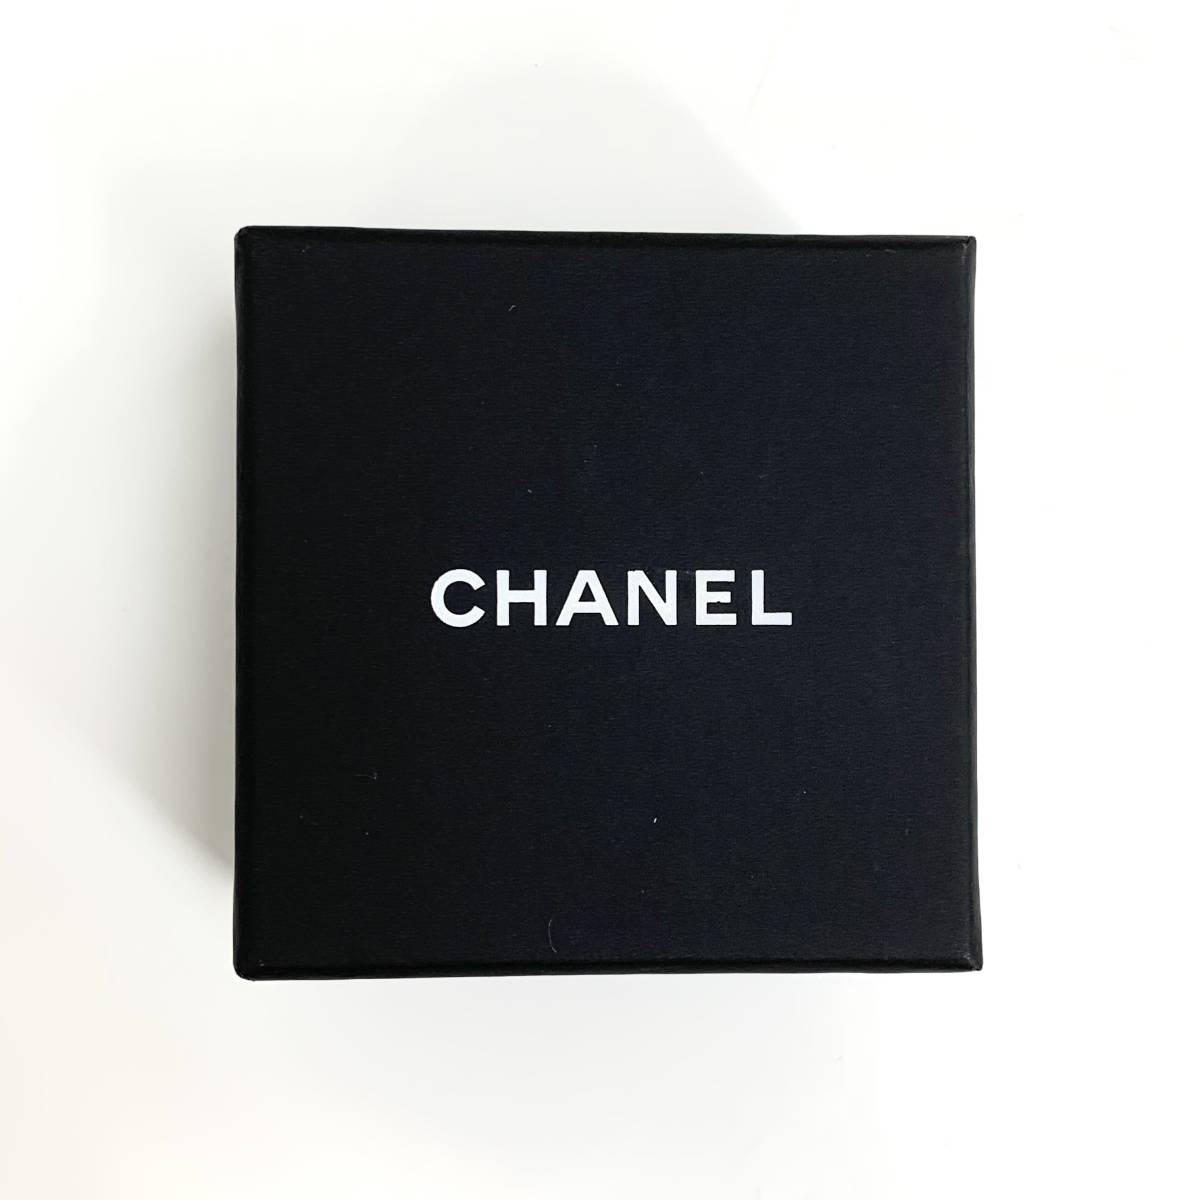 5013 Chanel here Mark pearl round earrings black 